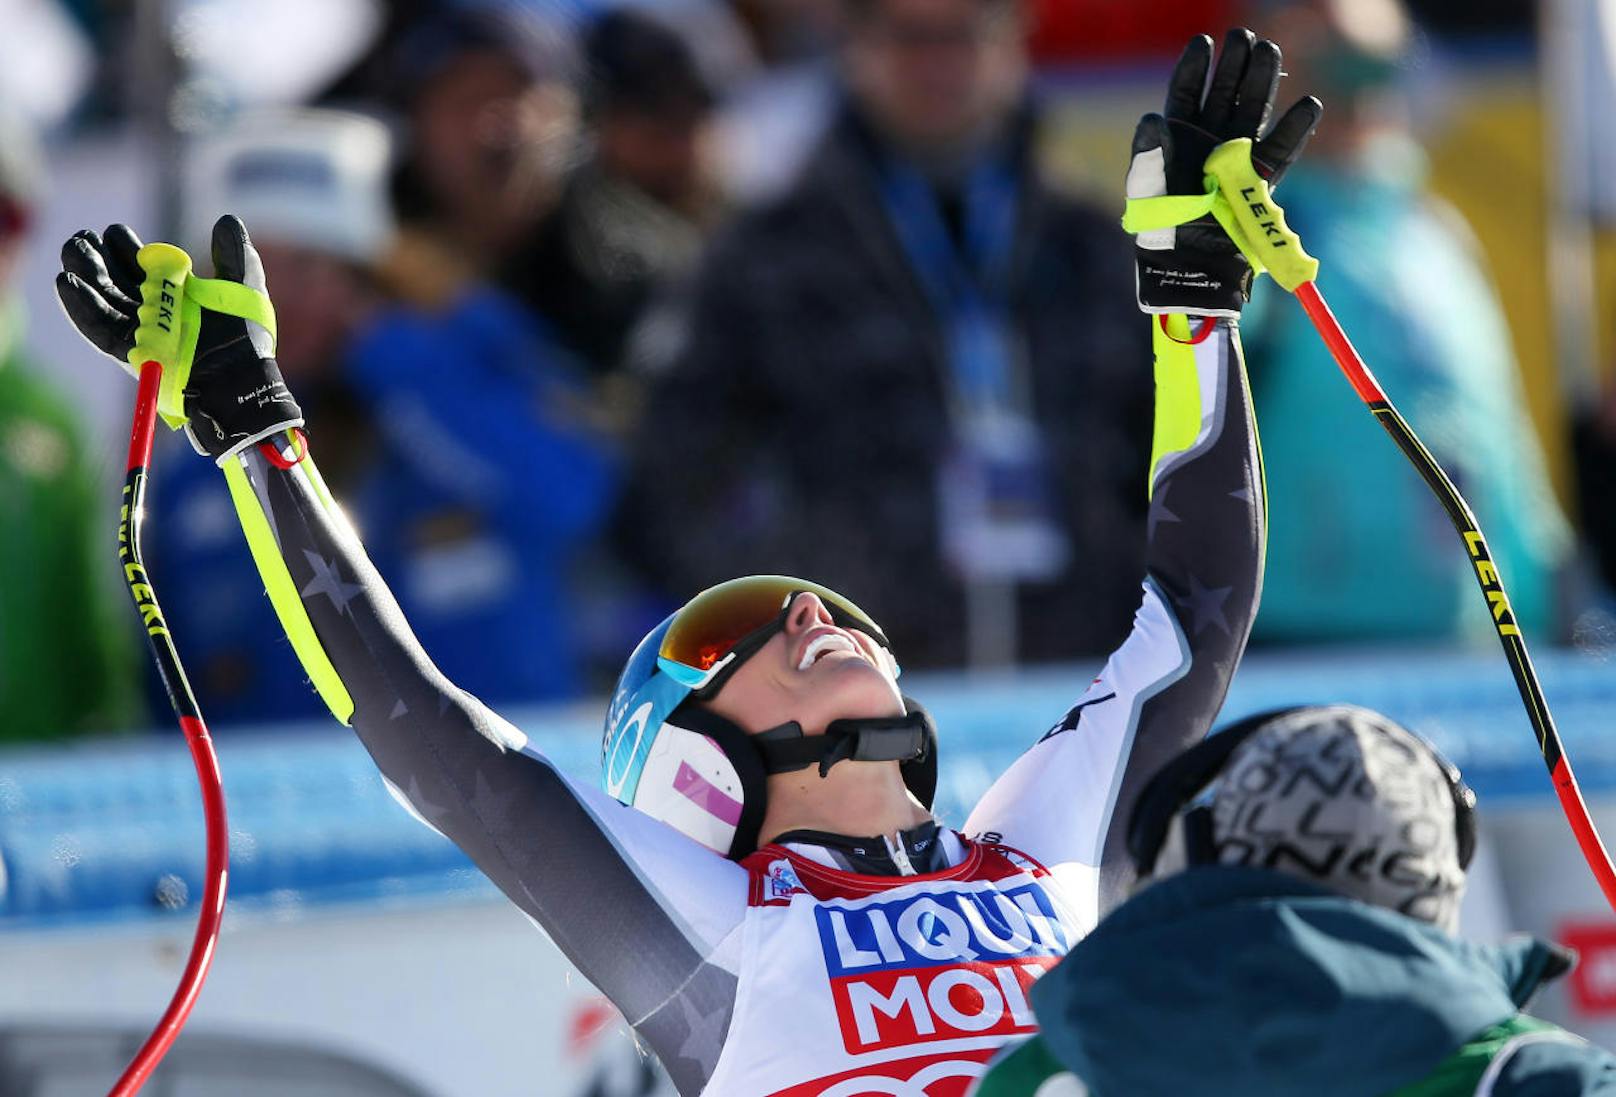 Gold im Slalom: Mikaela Shiffrin